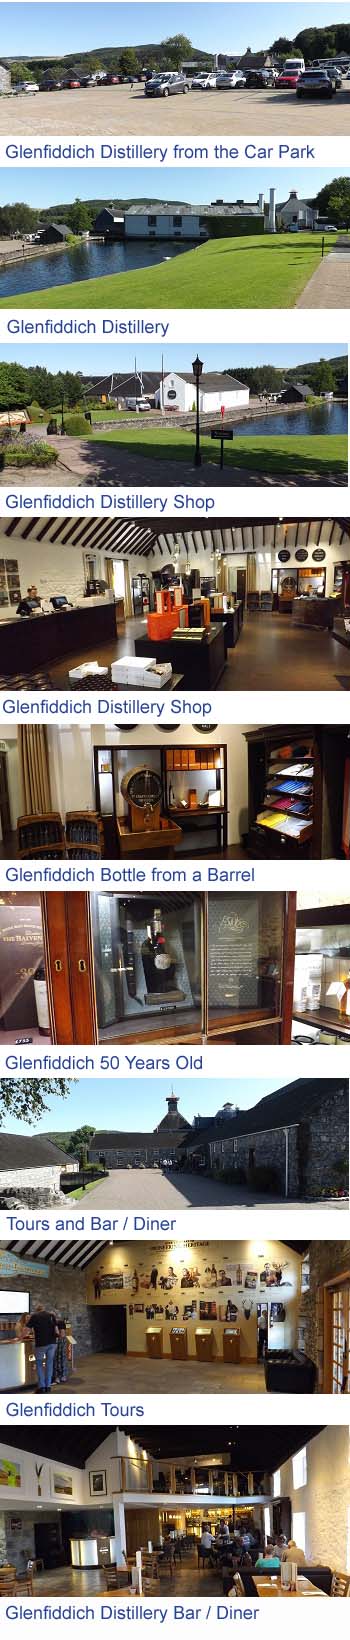 Glenfiddich Distillery Photos